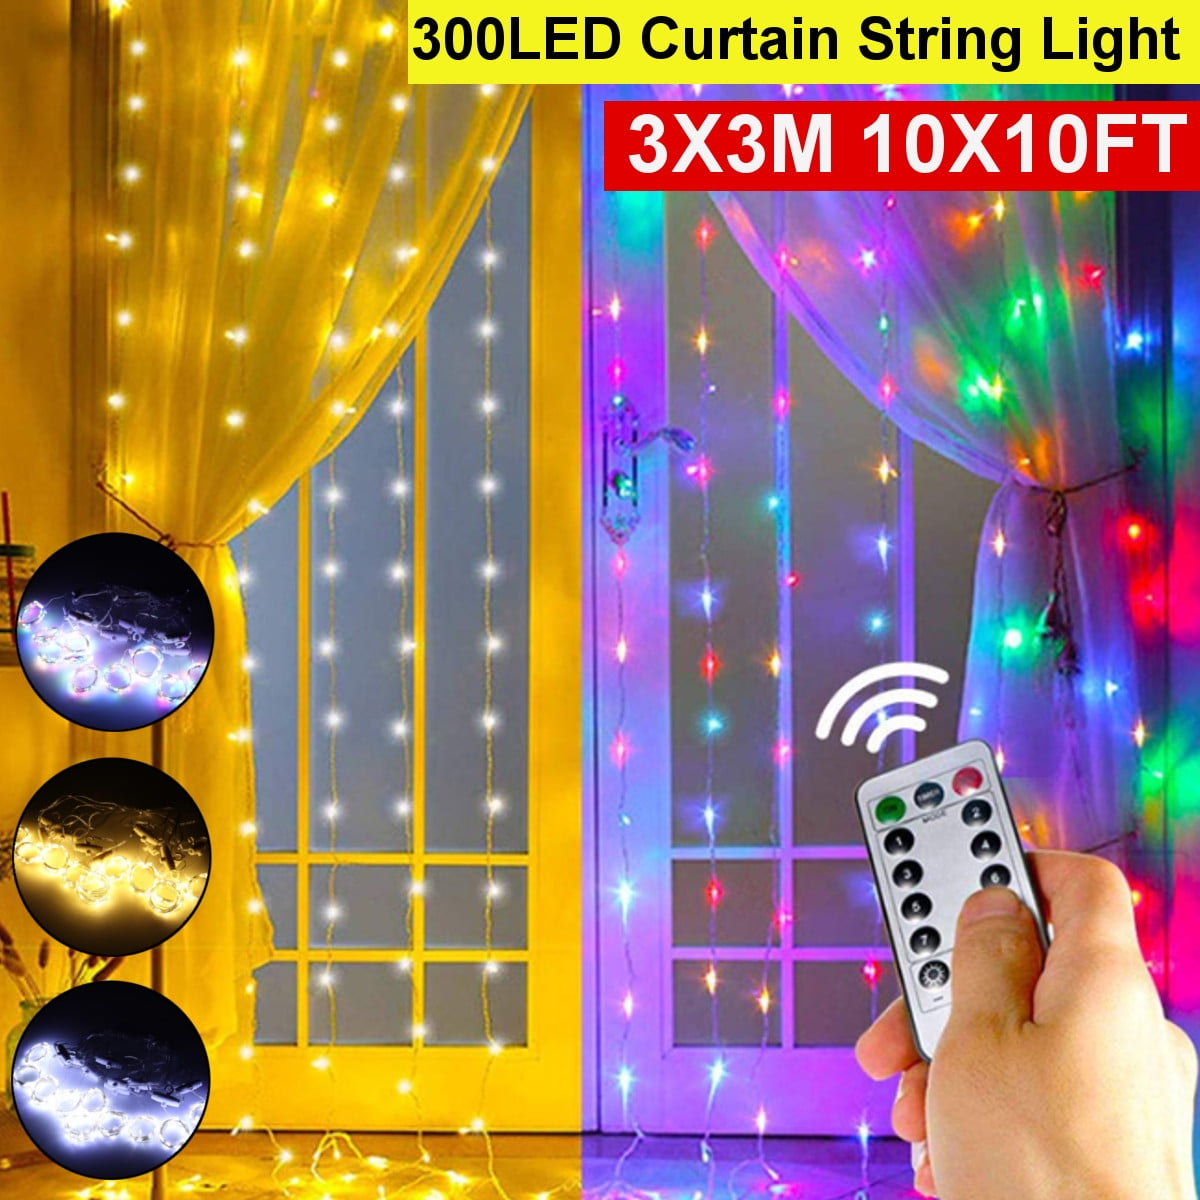 10ft*10ft Window Curtain Lights 8 Modes LED Fariy String Light 300LED USB Supply 